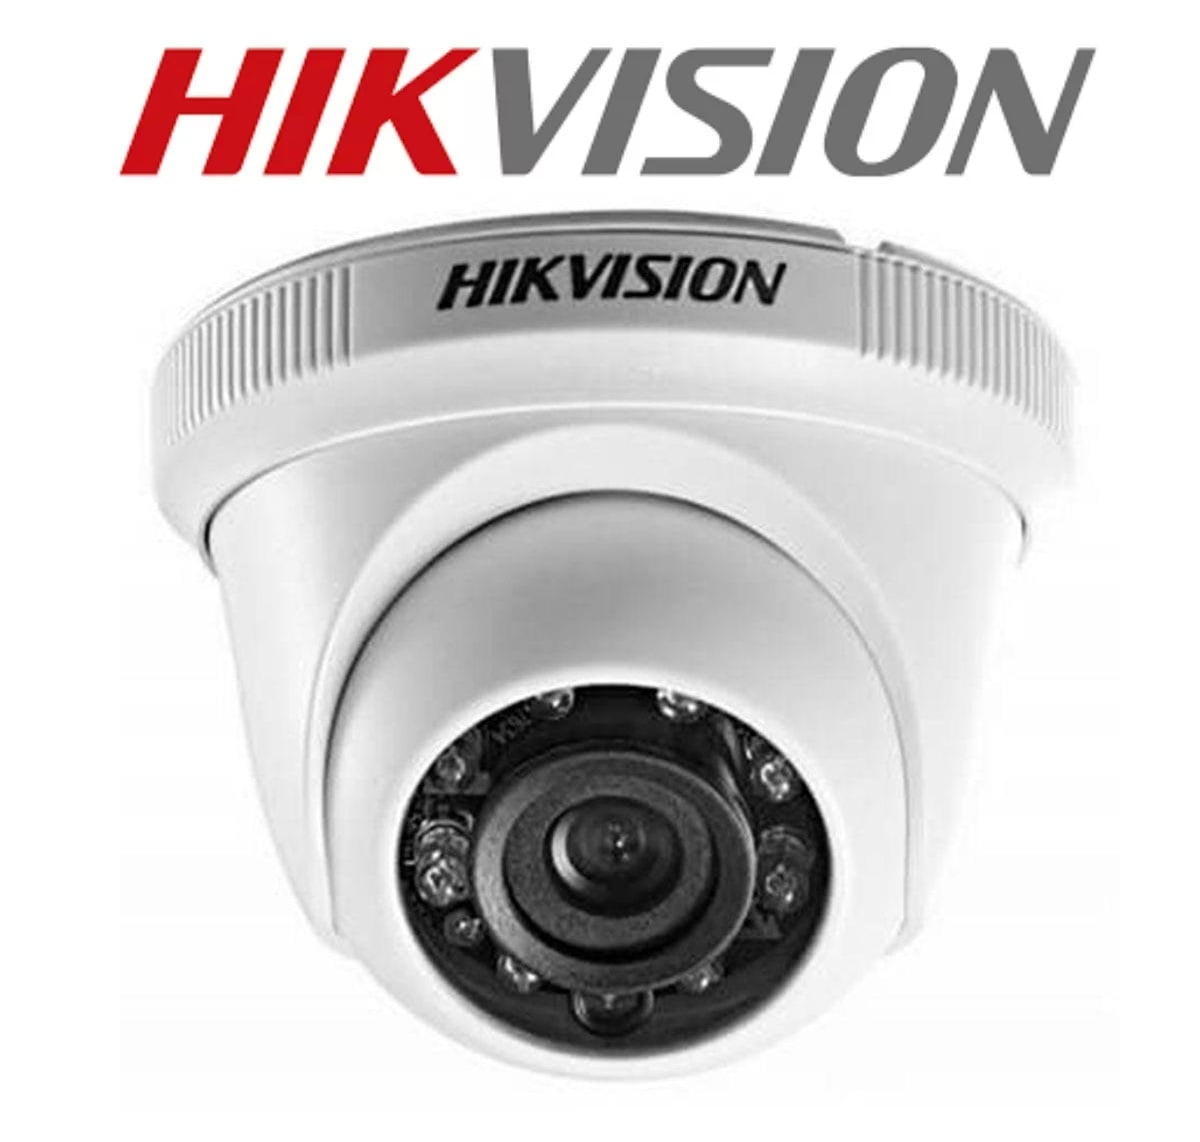 Camera Hikvision Ds-2ce56c0t-irmf de segurança dome infra de 20mts hd 720P lente 3.6mm 4 em 1 tvi/ahd/cvi/cvbs 